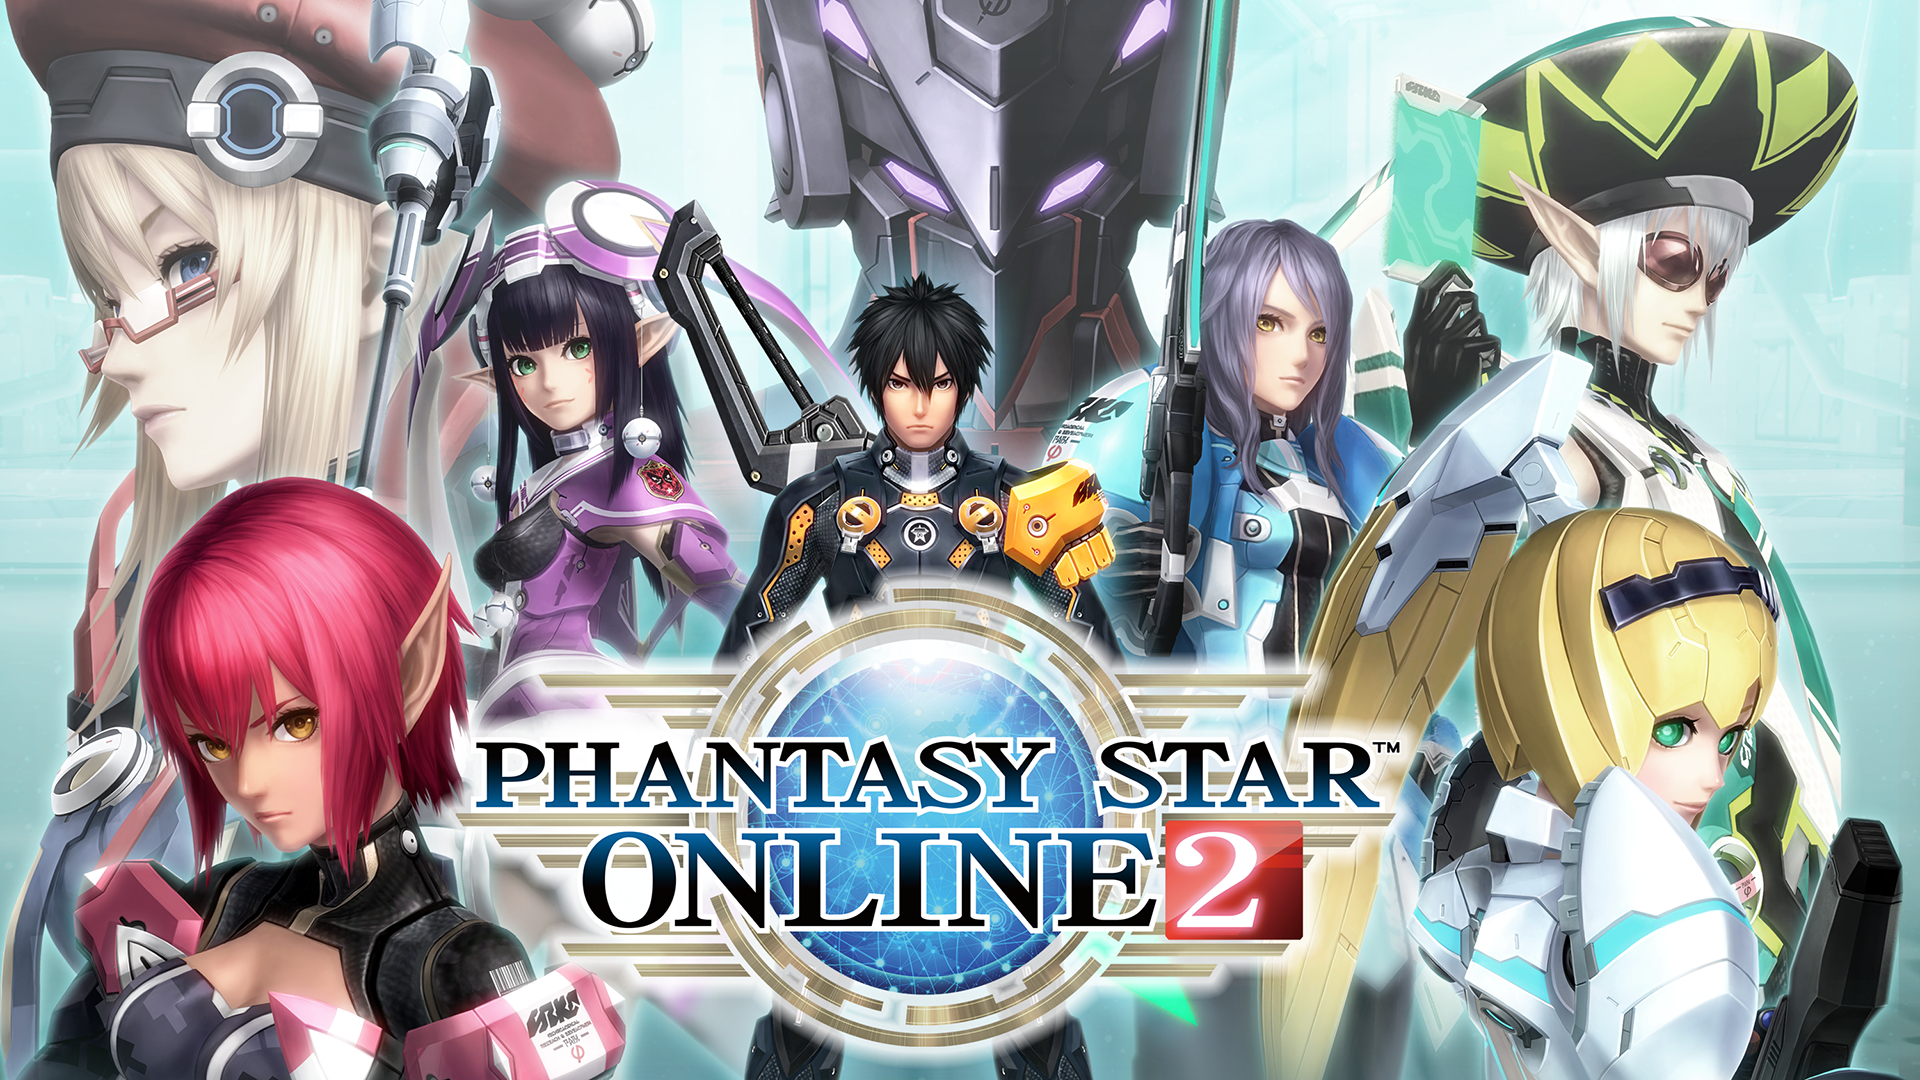 free video games - Phantasy Star Online 2